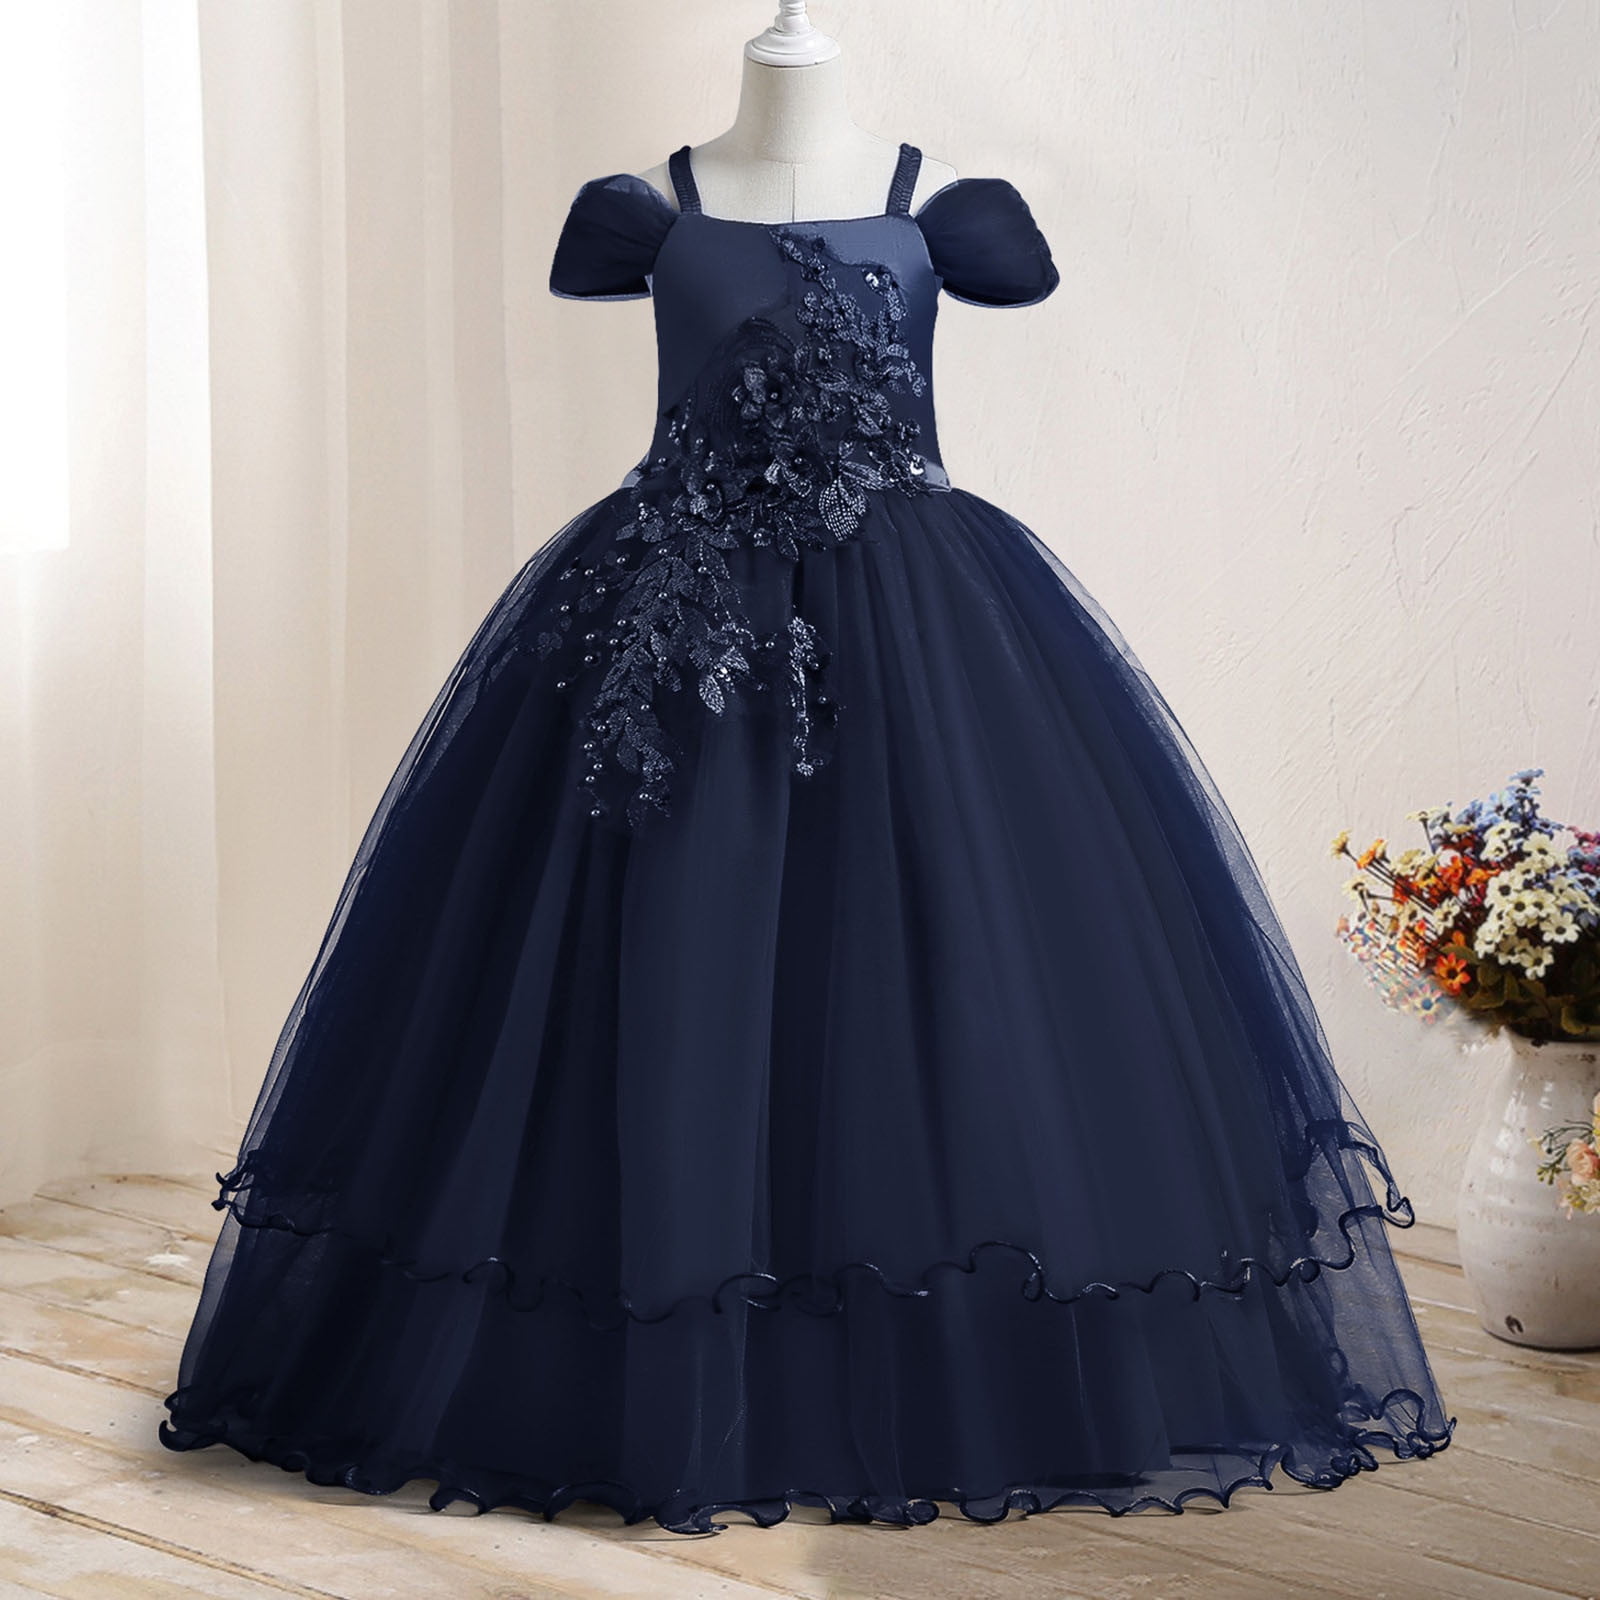 Black Flower Girl Ball Gown Dress | Junior Bridesmaid